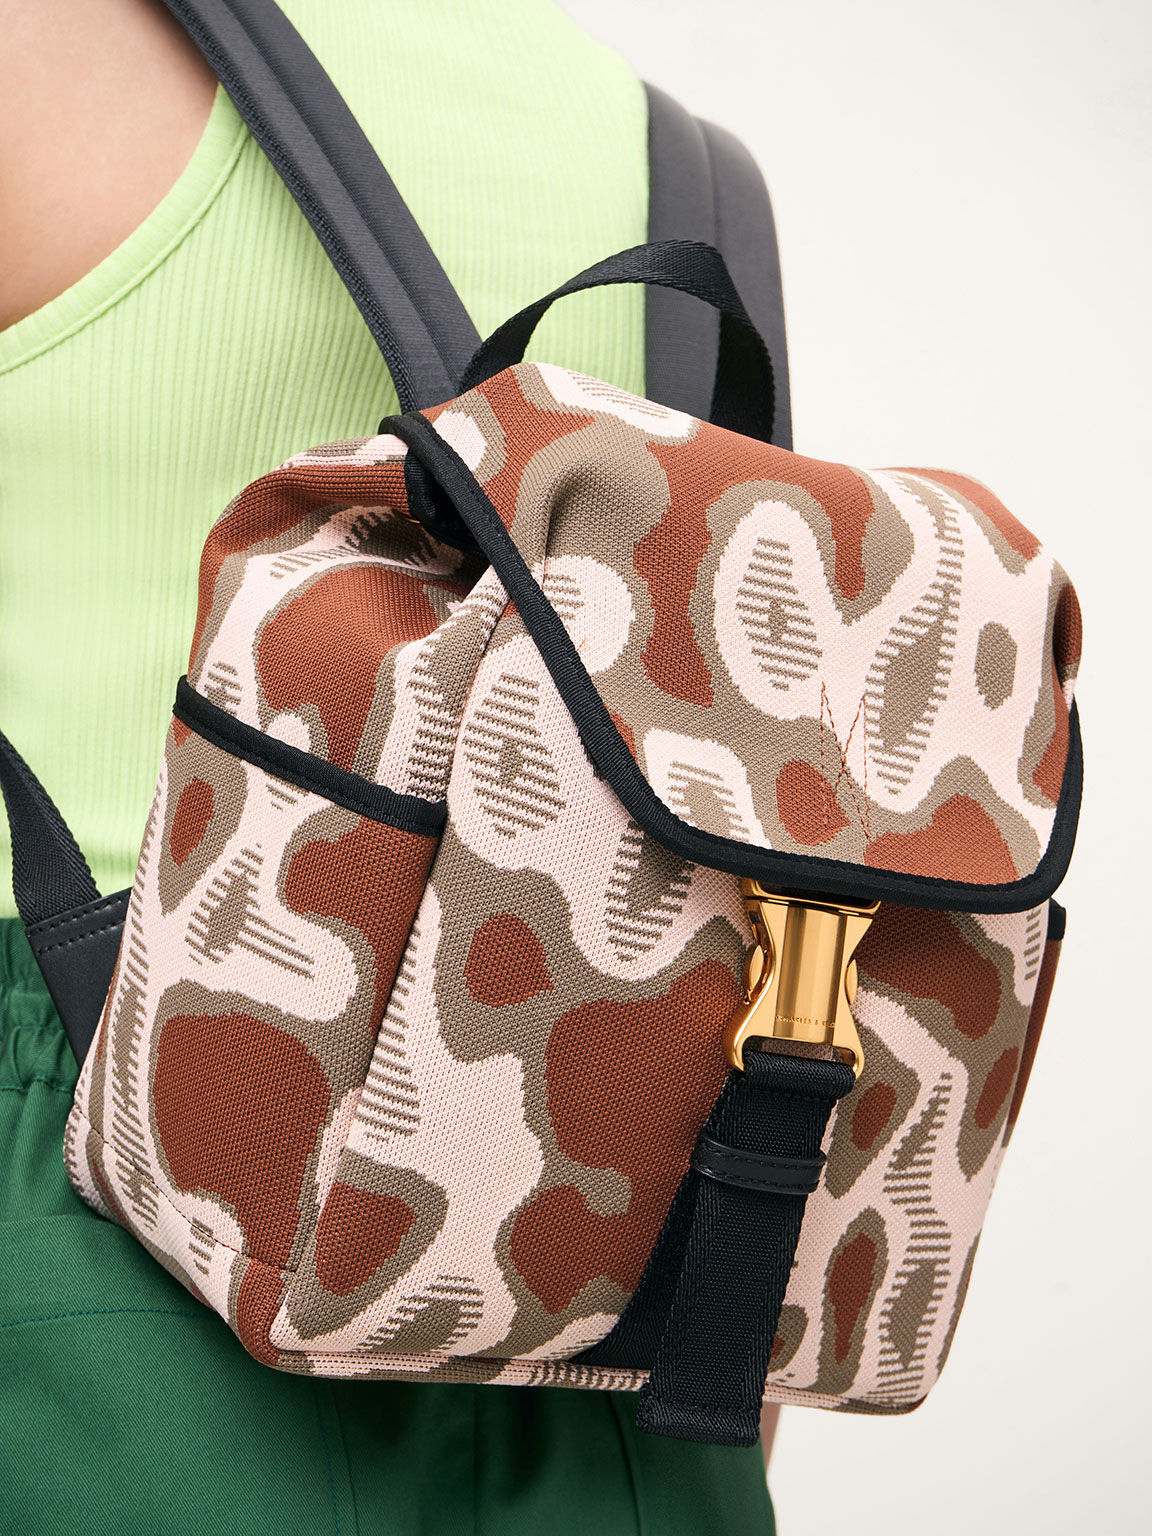 Knit & Nylon Patterned Metallic Buckle Backpack, Multi, hi-res